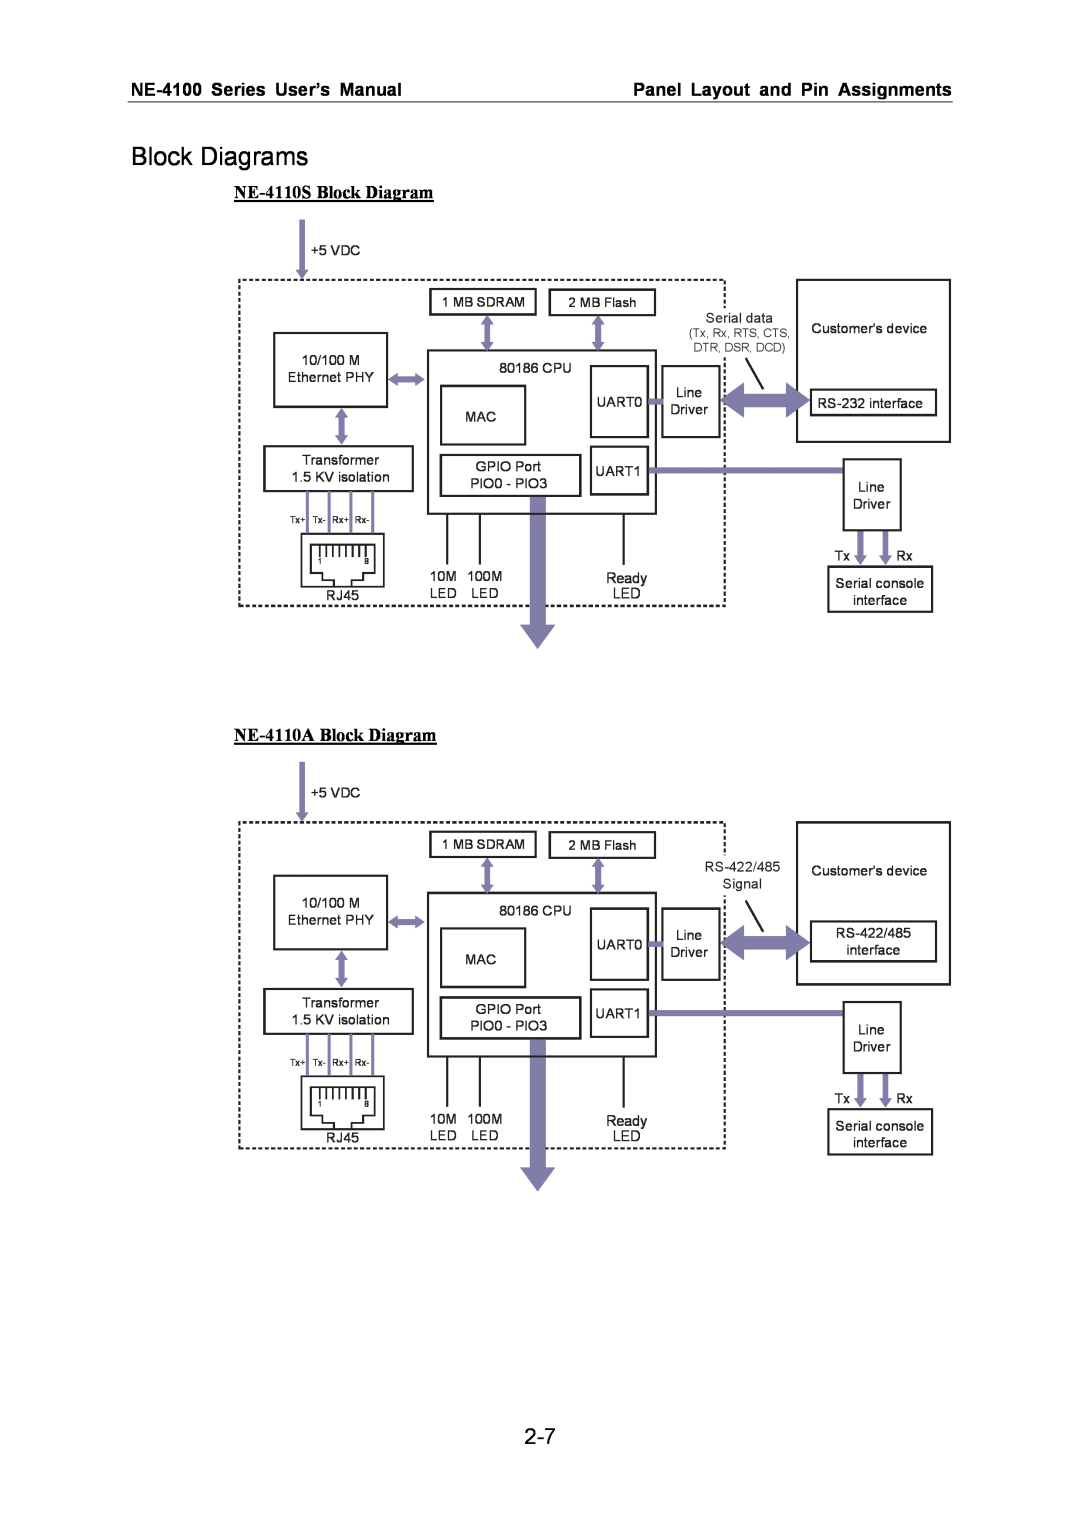 Moxa Technologies user manual Block Diagrams, NE-4100 Series User’s Manual, Panel Layout and Pin Assignments 